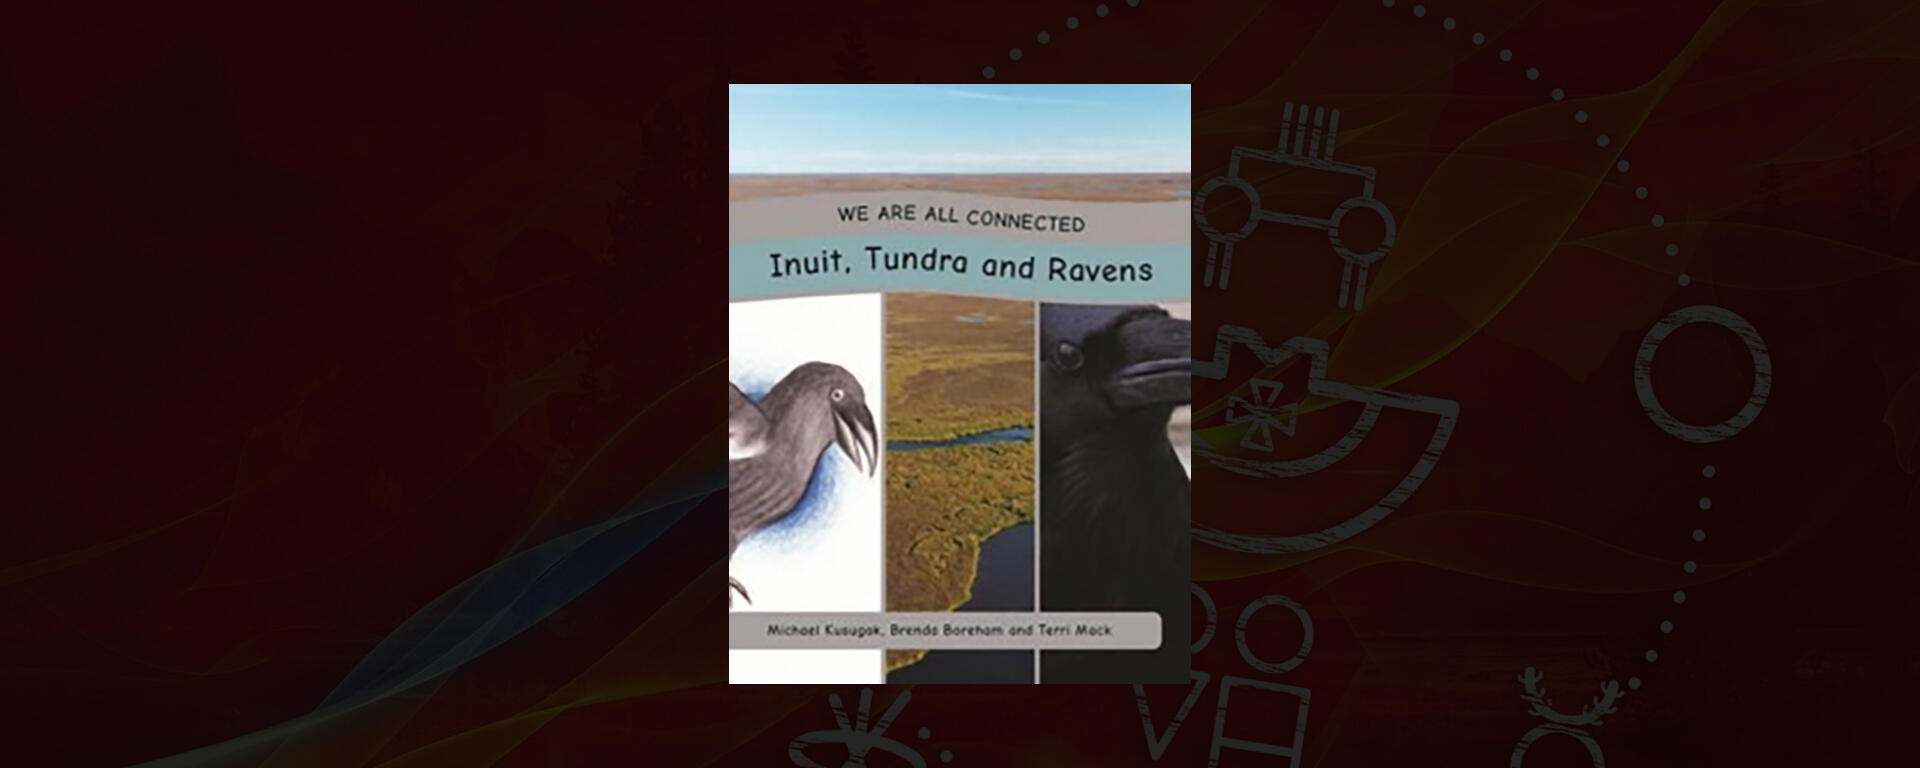 Inuit, Tundra and Ravens